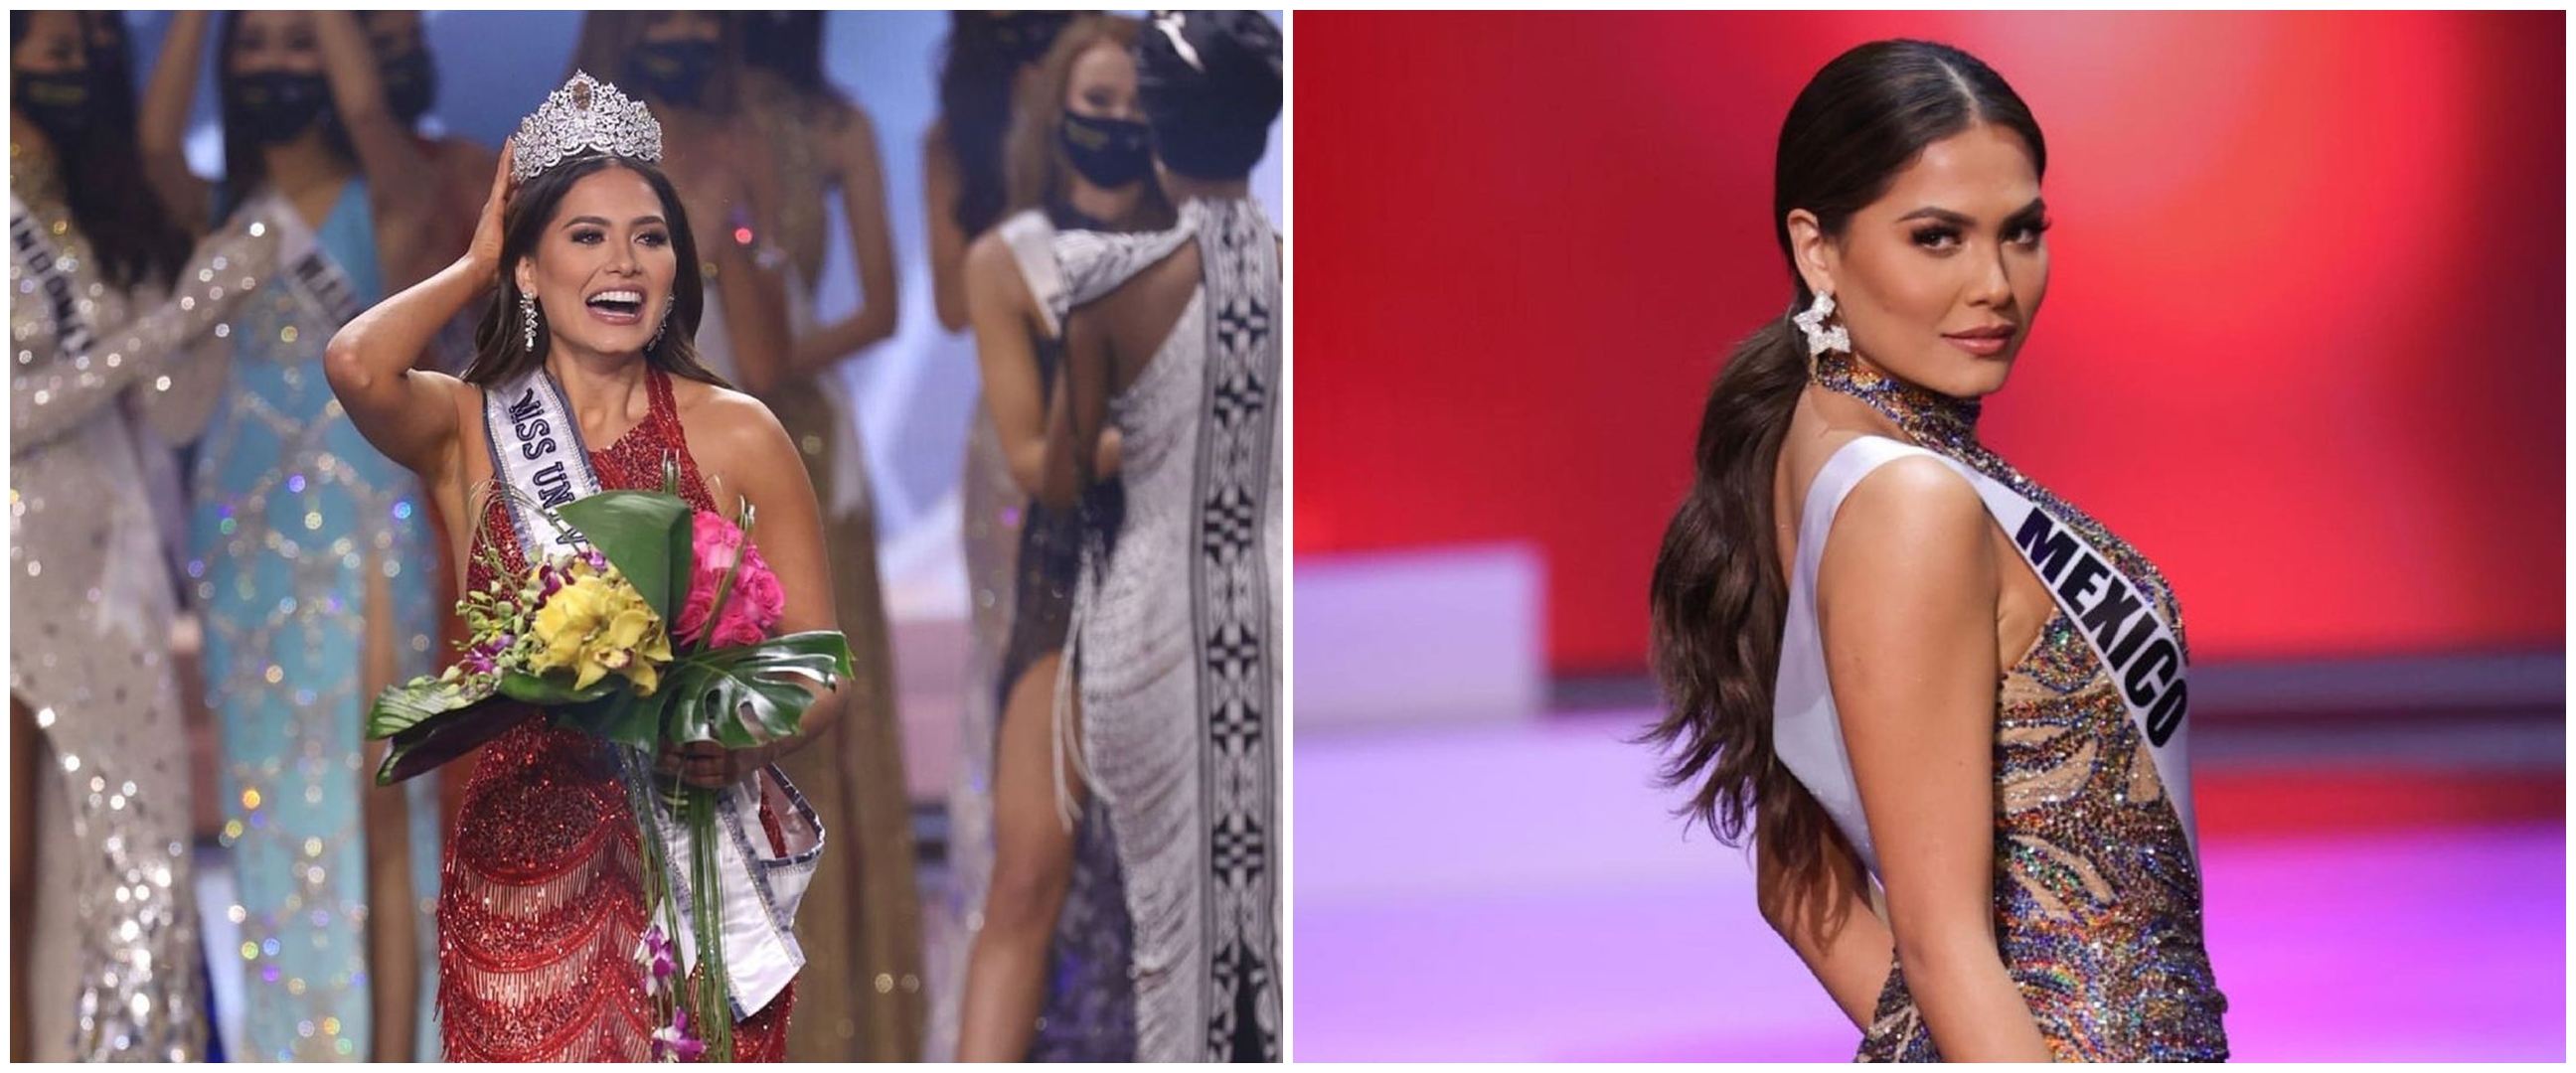 10 Pesona Andrea Meza pemenang Miss Universe 2020 tanpa makeup